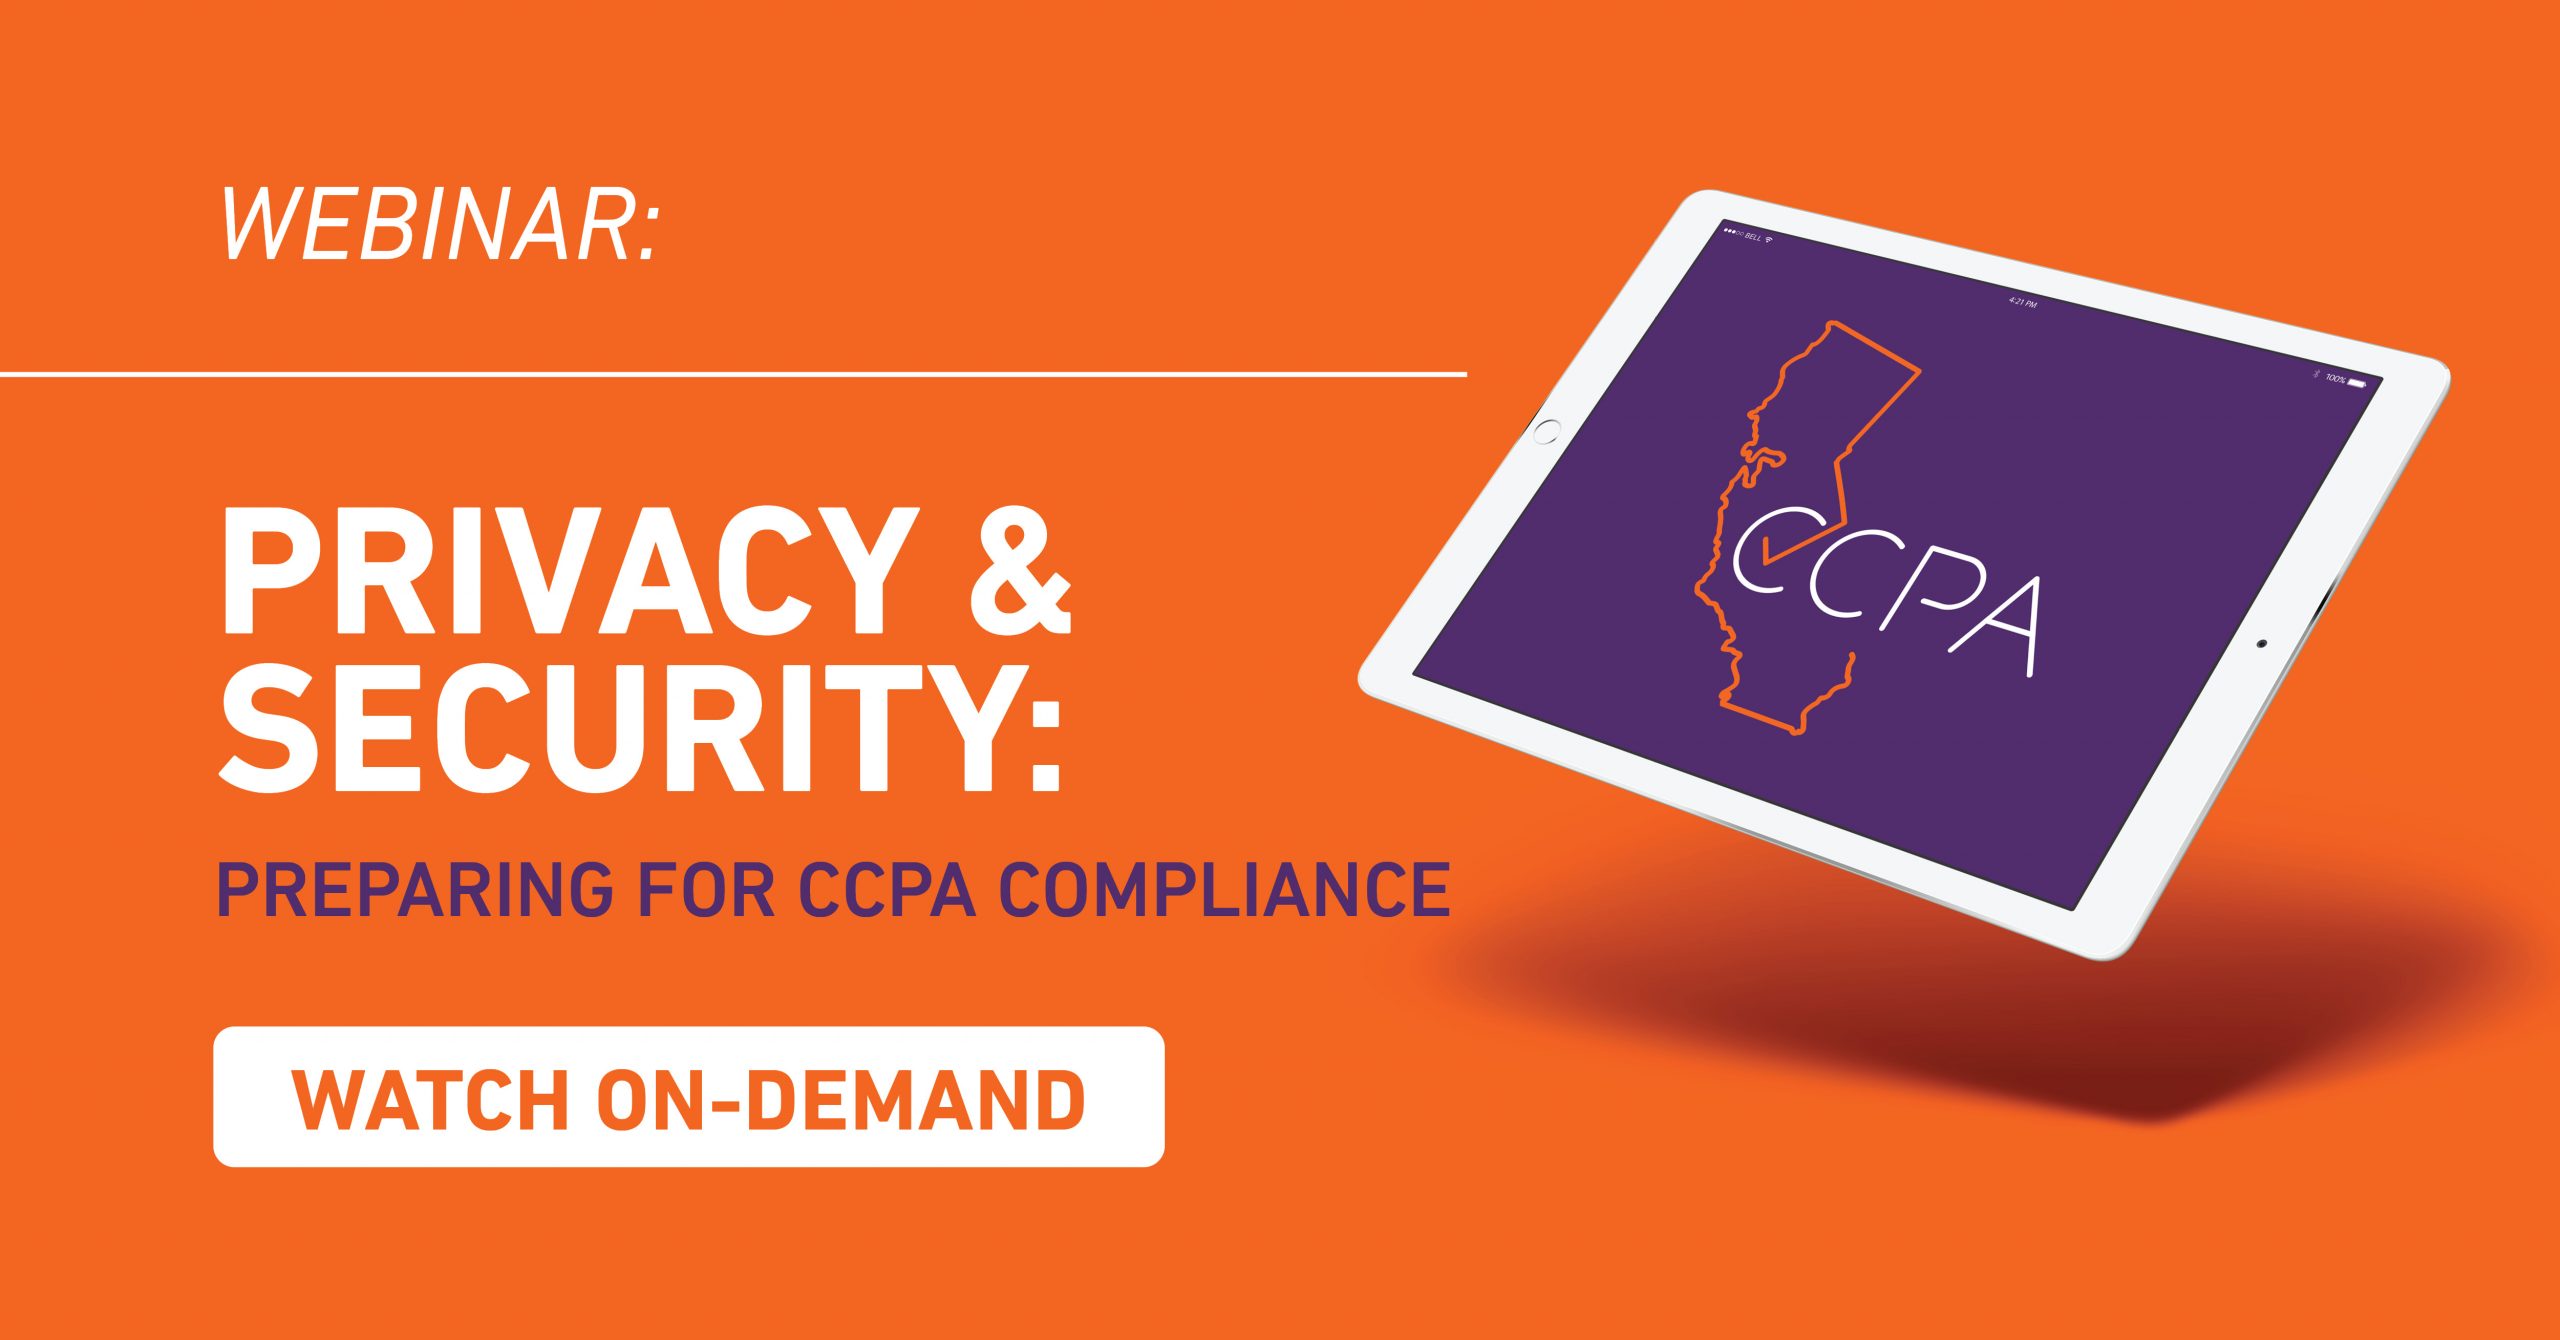 Privacy & Security Preparing for CCPA Compliance Webinar Armor